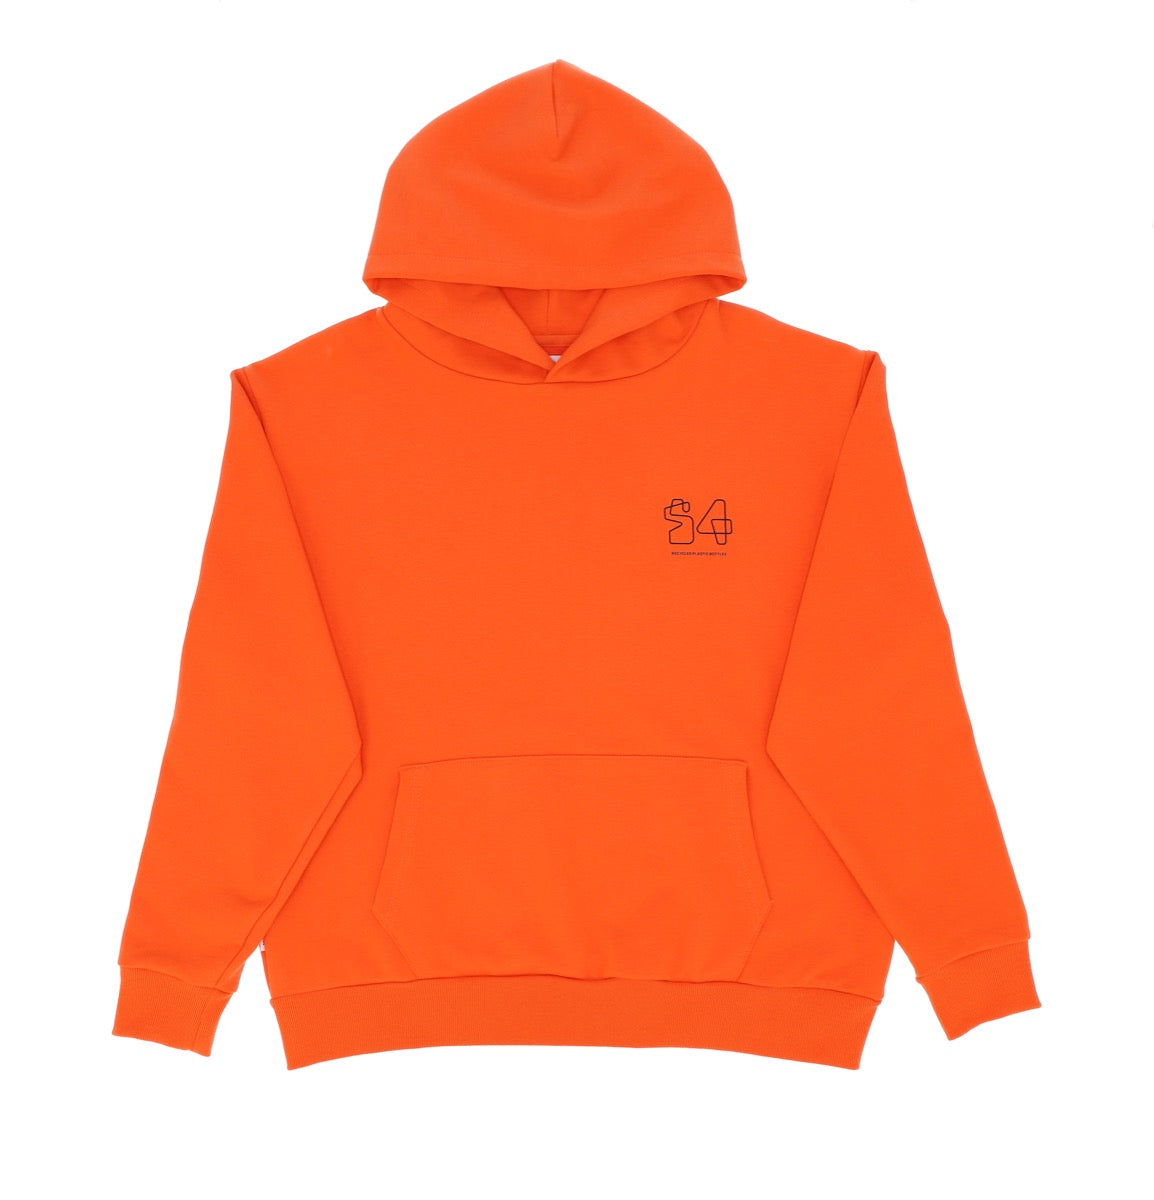 Unisex Hoodie 54 - Orange